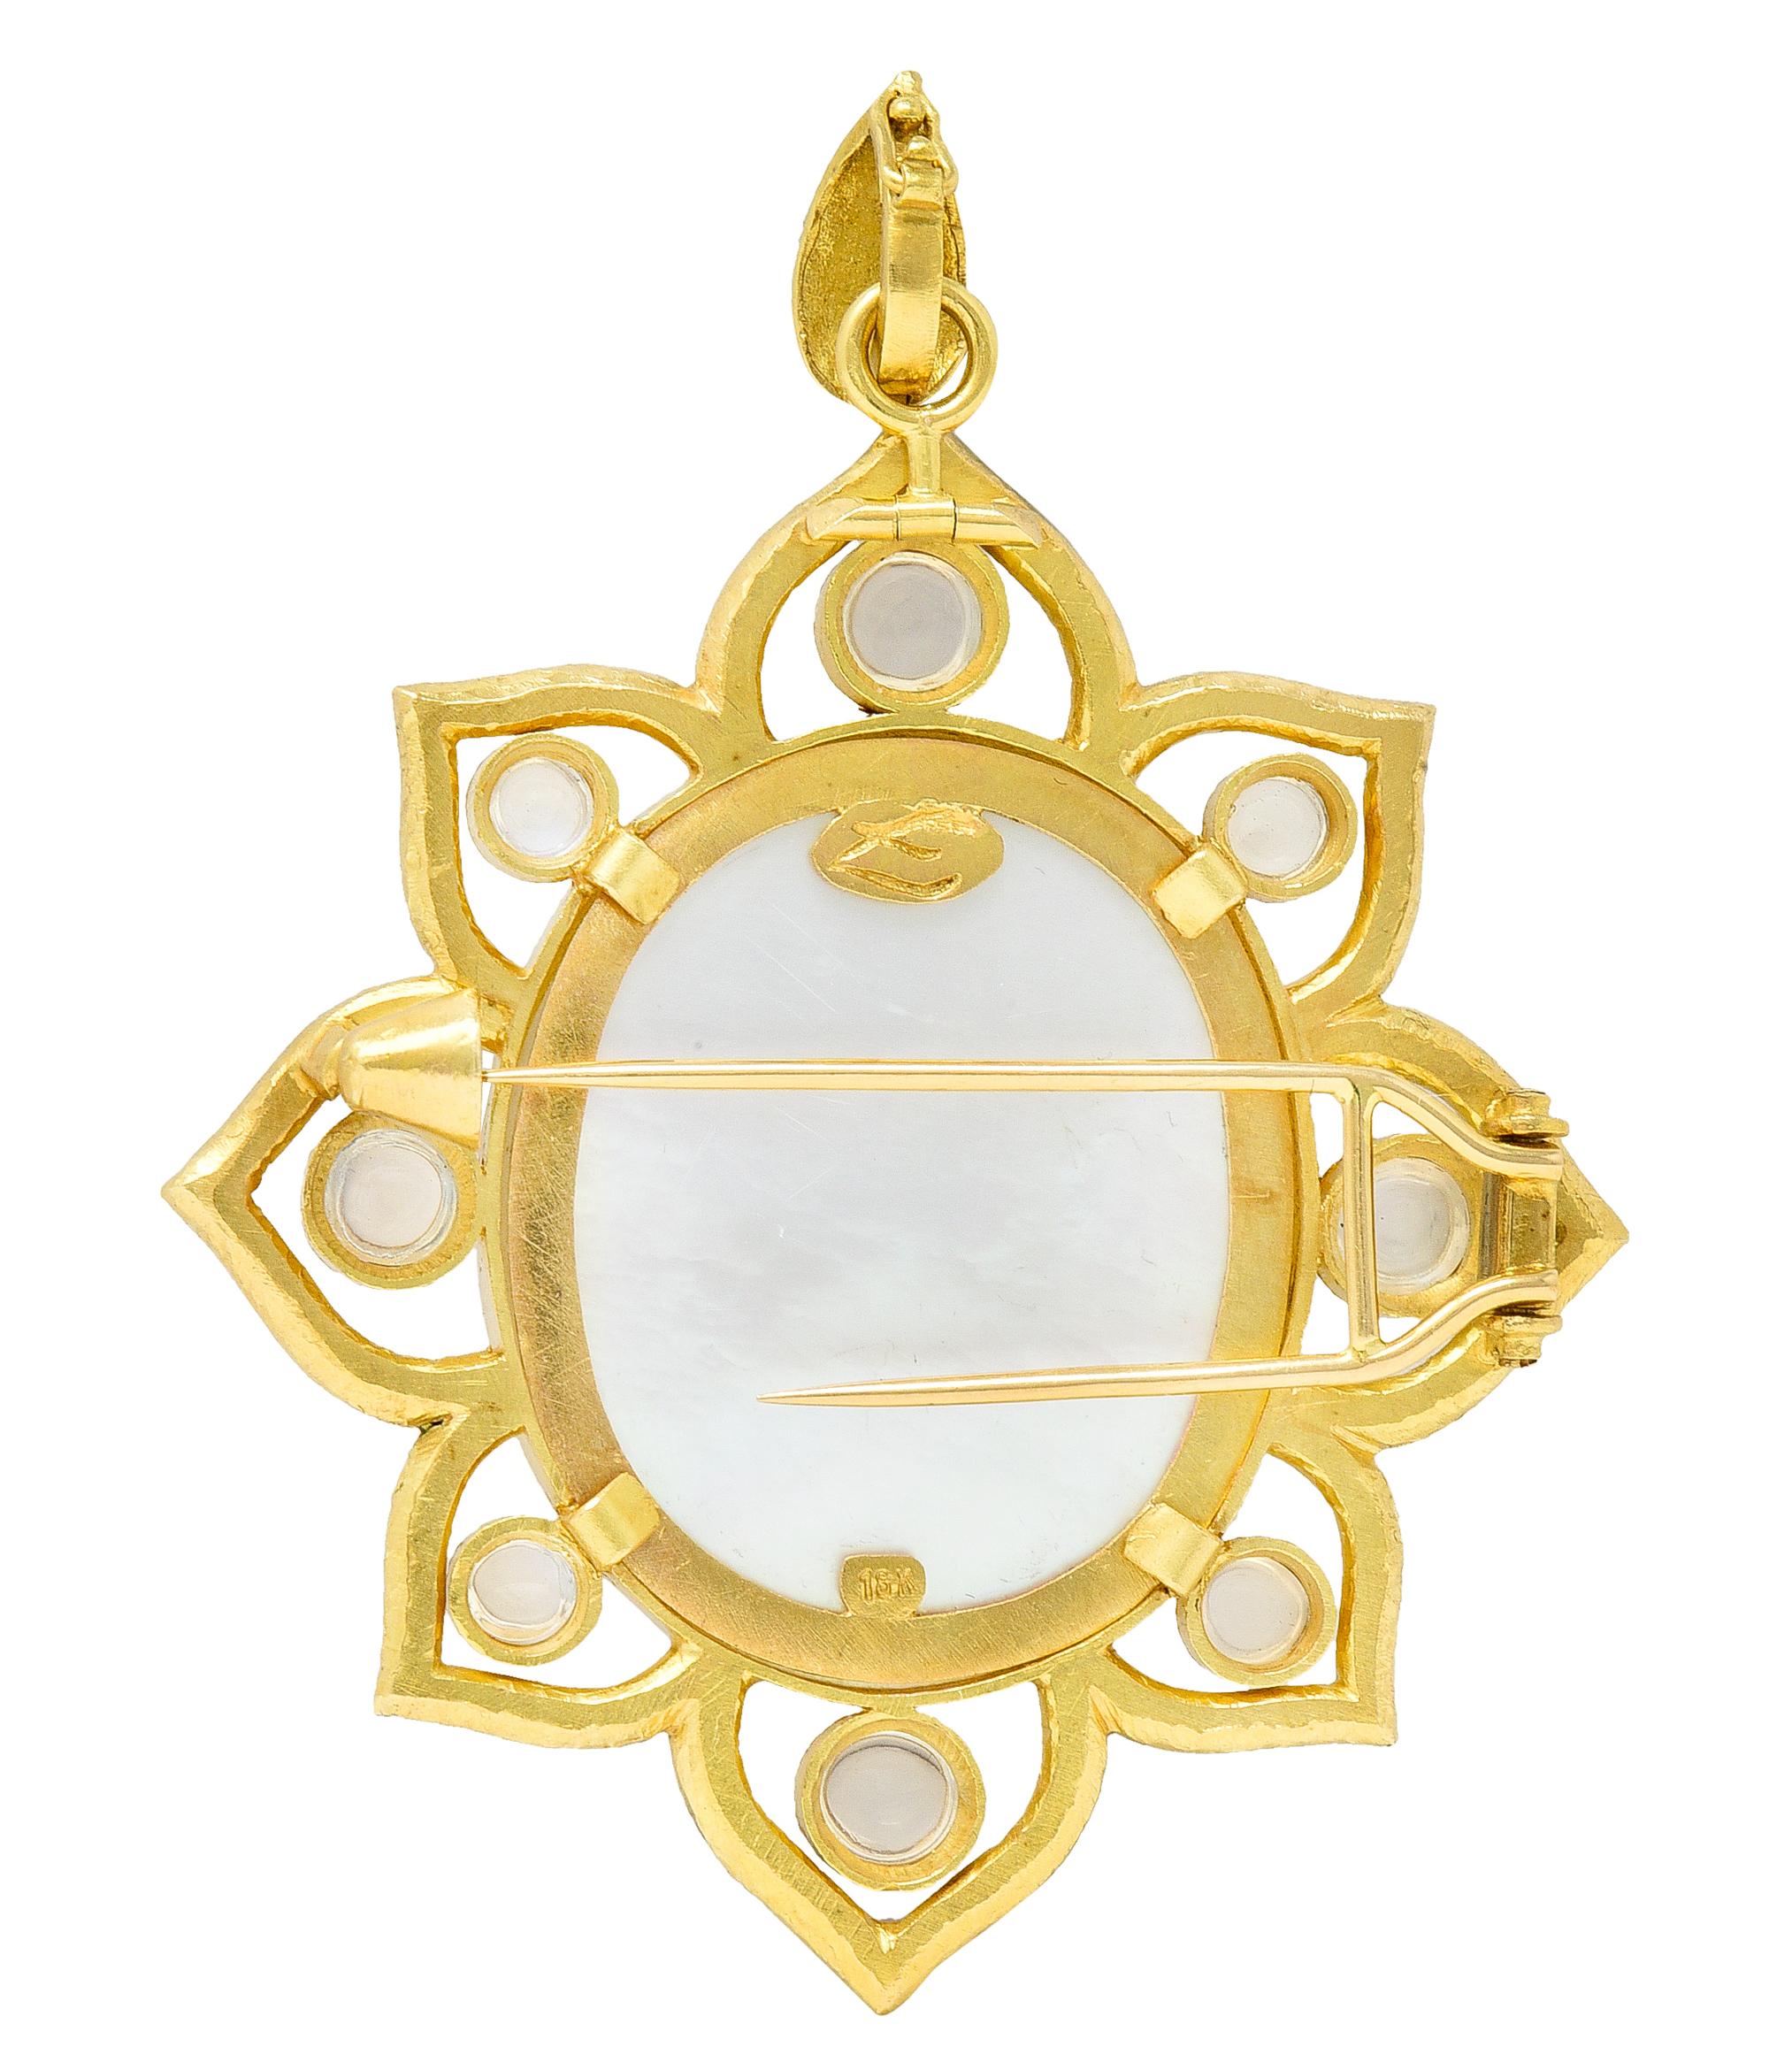 Cabochon Elizabeth Locke Moonstone Glass Pearl 18 Karat Gold Goddess Pendant Brooch